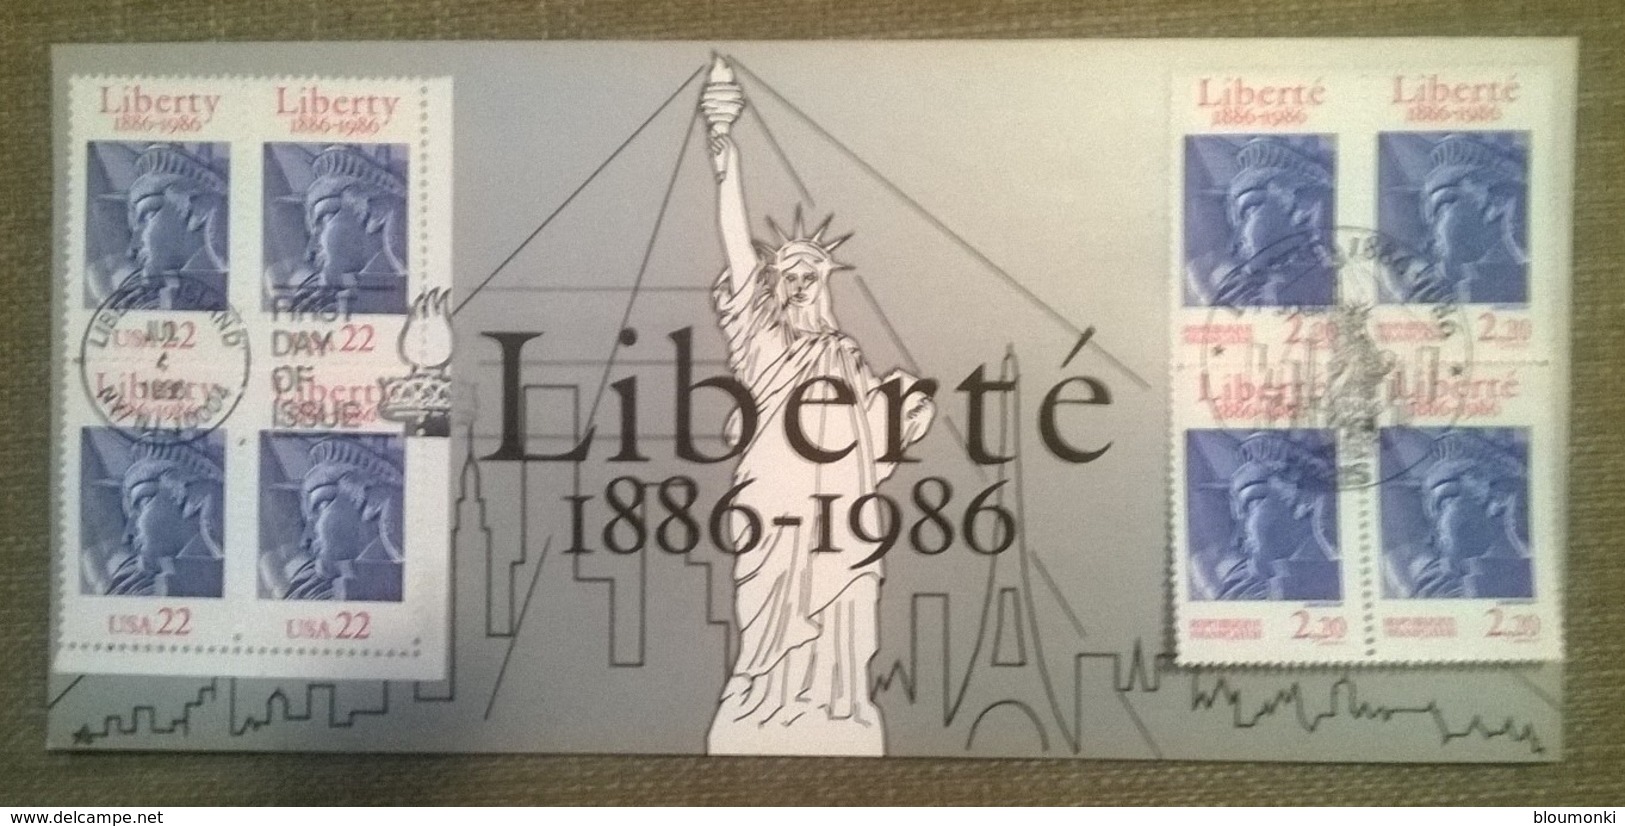 Bloc De 8 Timbres / Centenaire Liberté 1886 - 1986 // Usa Fdc - Unabhängigkeit USA